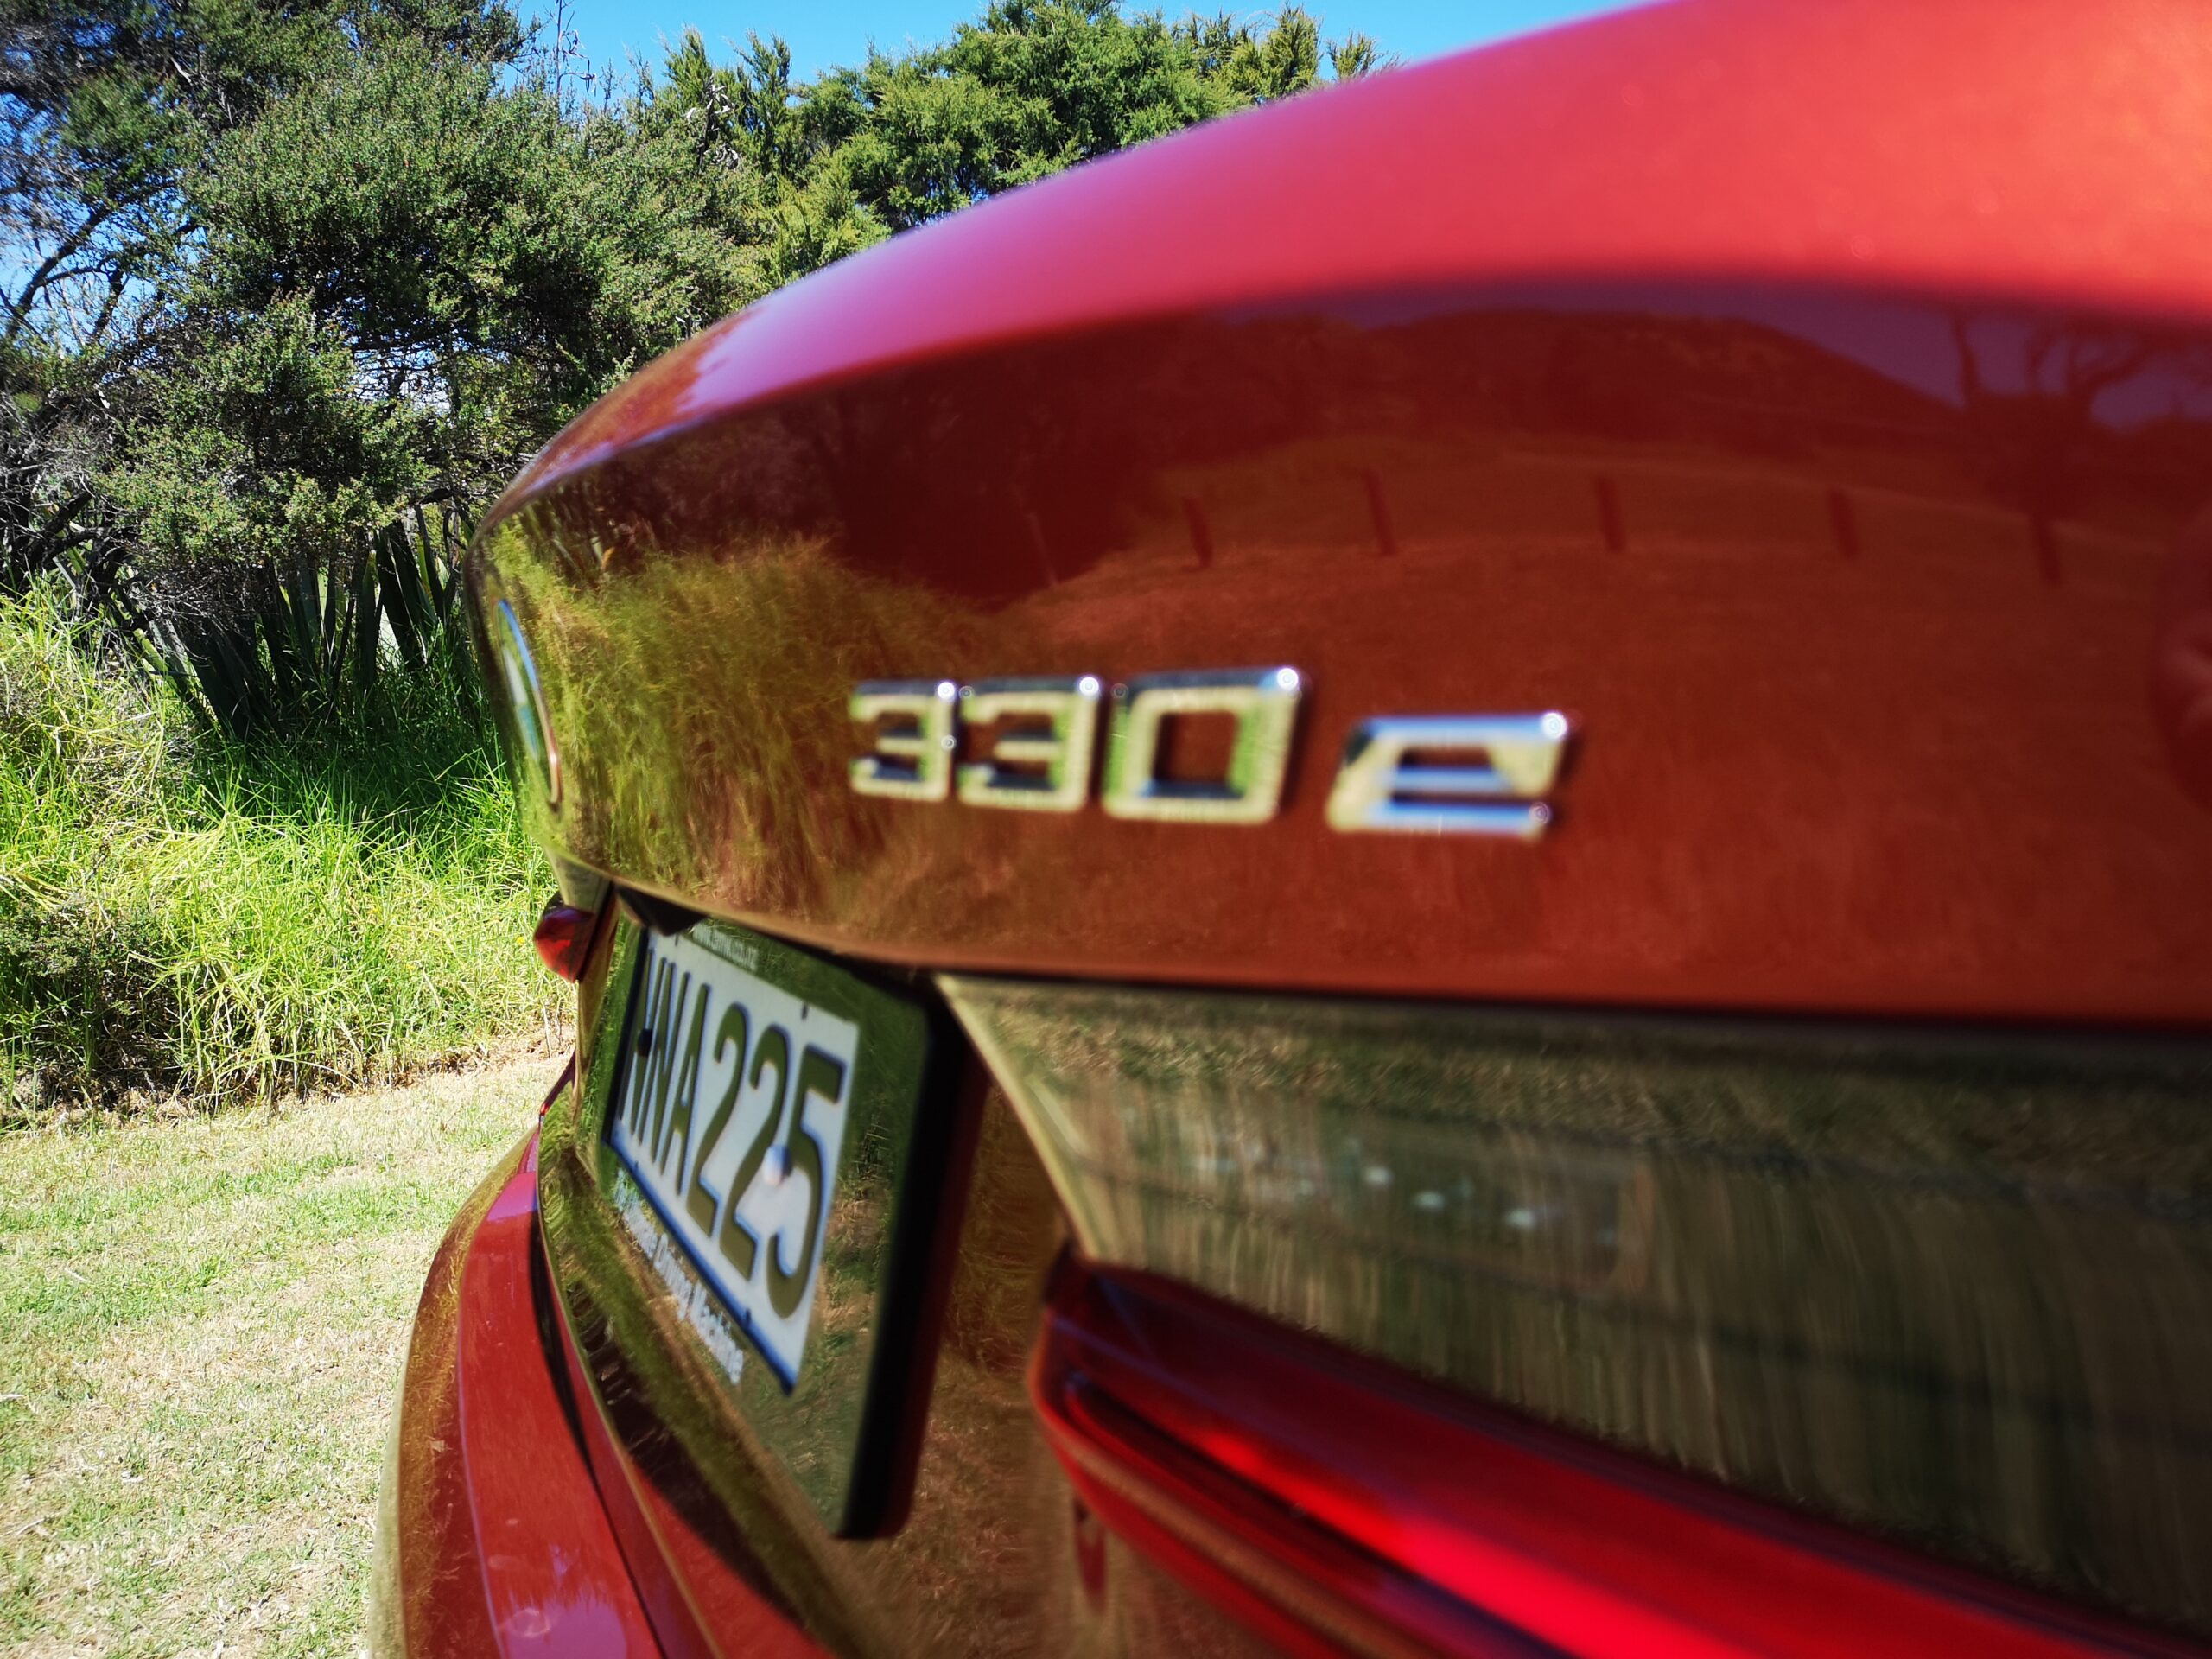 BMW 330e PHEV review NZ